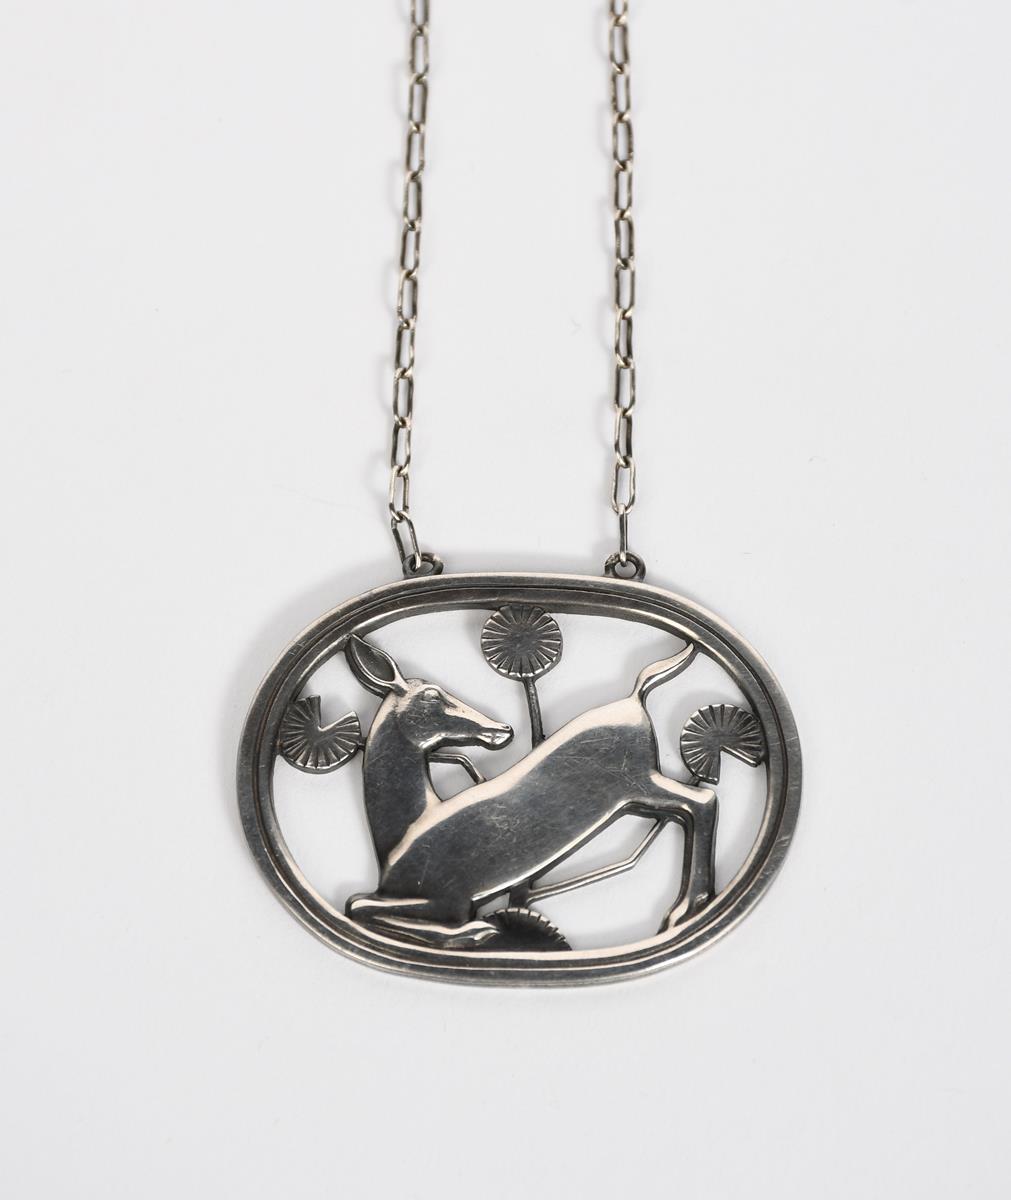 A Georg Jensen silver pendant necklace designed by Arno Malinowski, model no.95, pierced and cast in